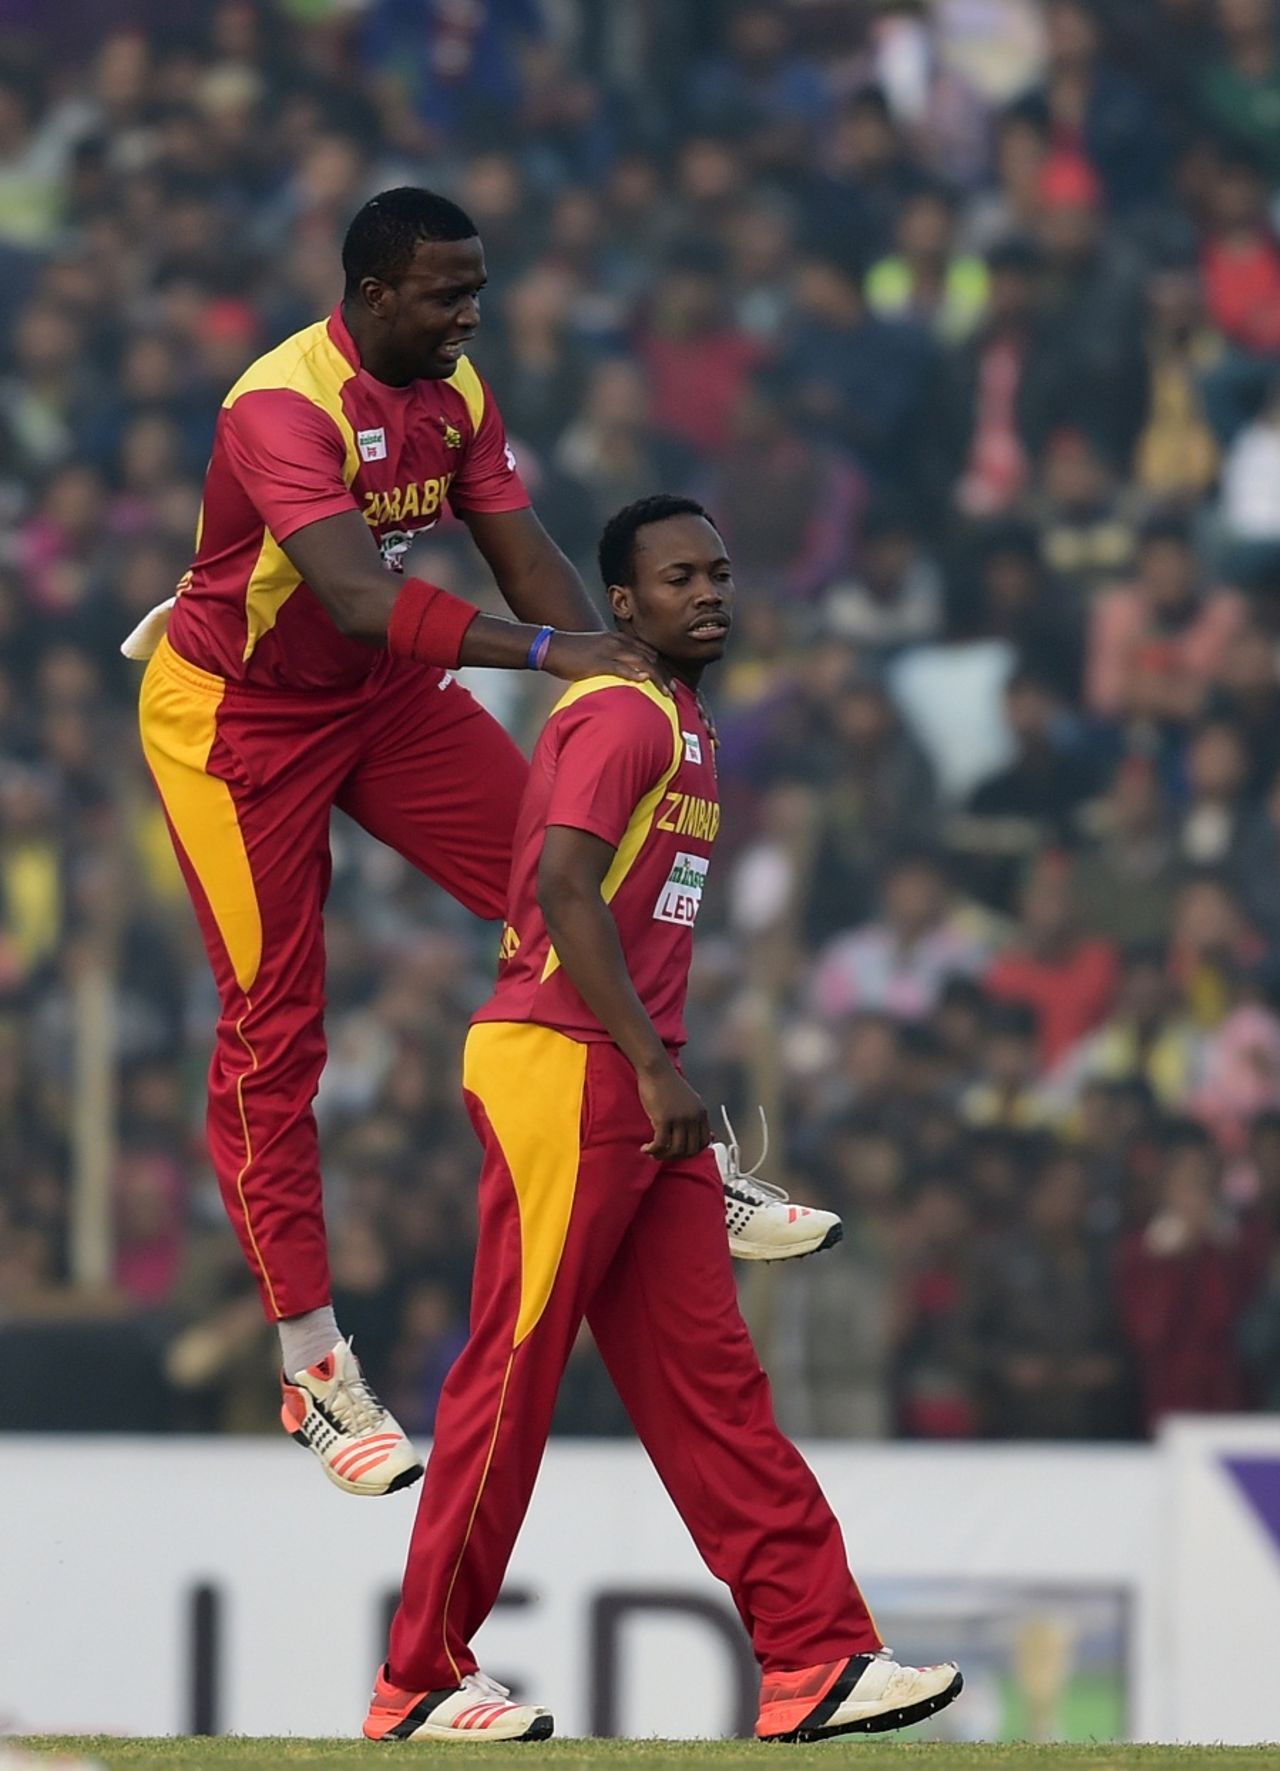 Tendai Chisoro and Neville Madziva led Zimbabwe's bowling effort, Bangladesh v Zimbabwe, 4th T20I, Khulna, January 22, 2016